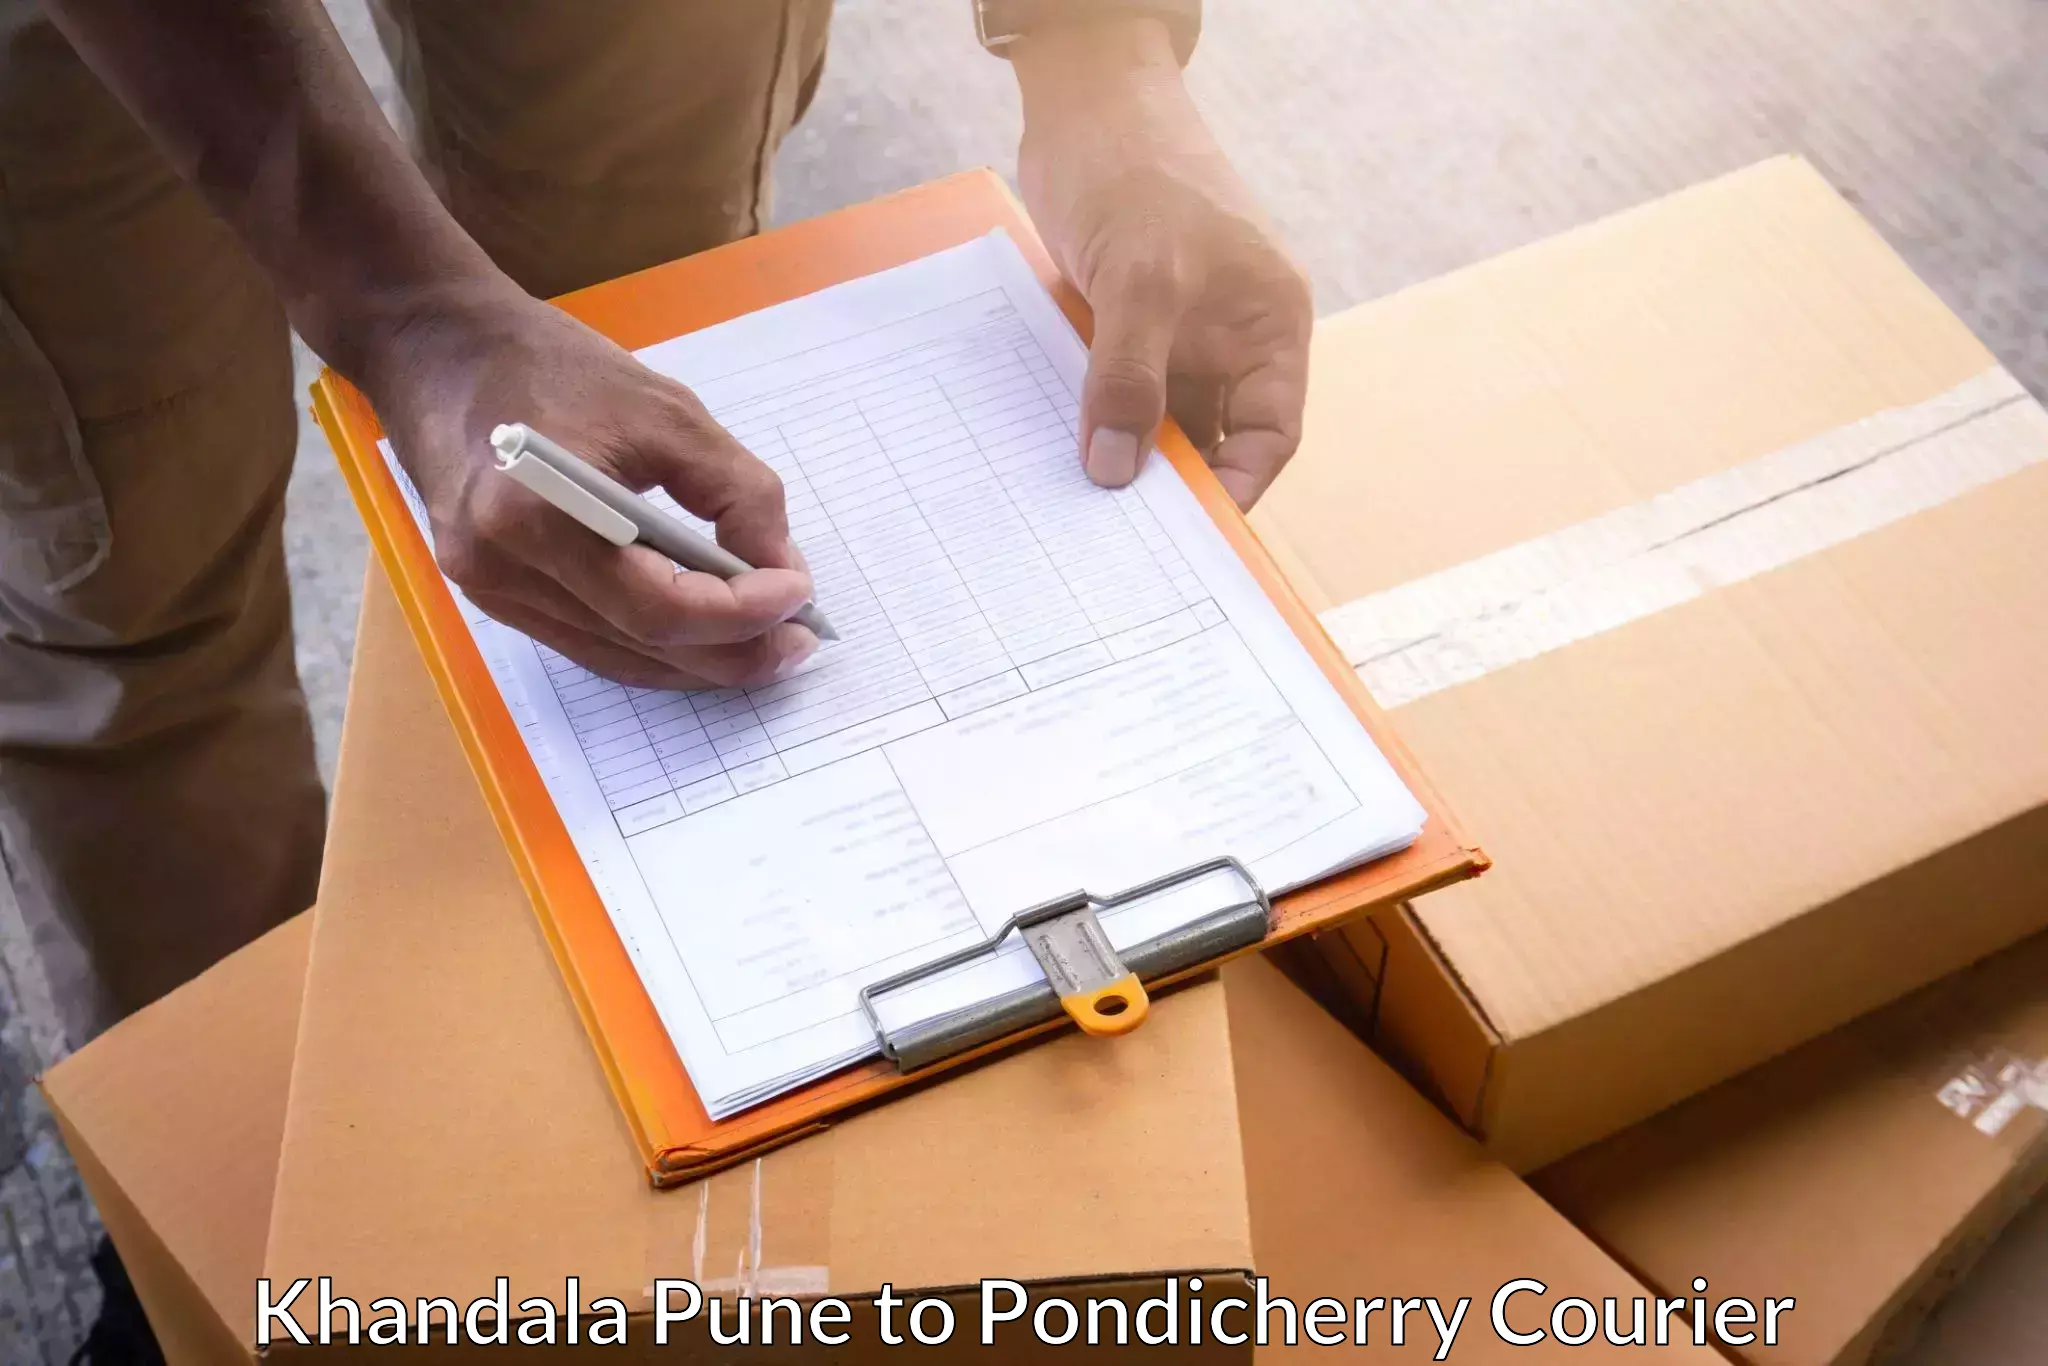 Nationwide courier service Khandala Pune to Pondicherry